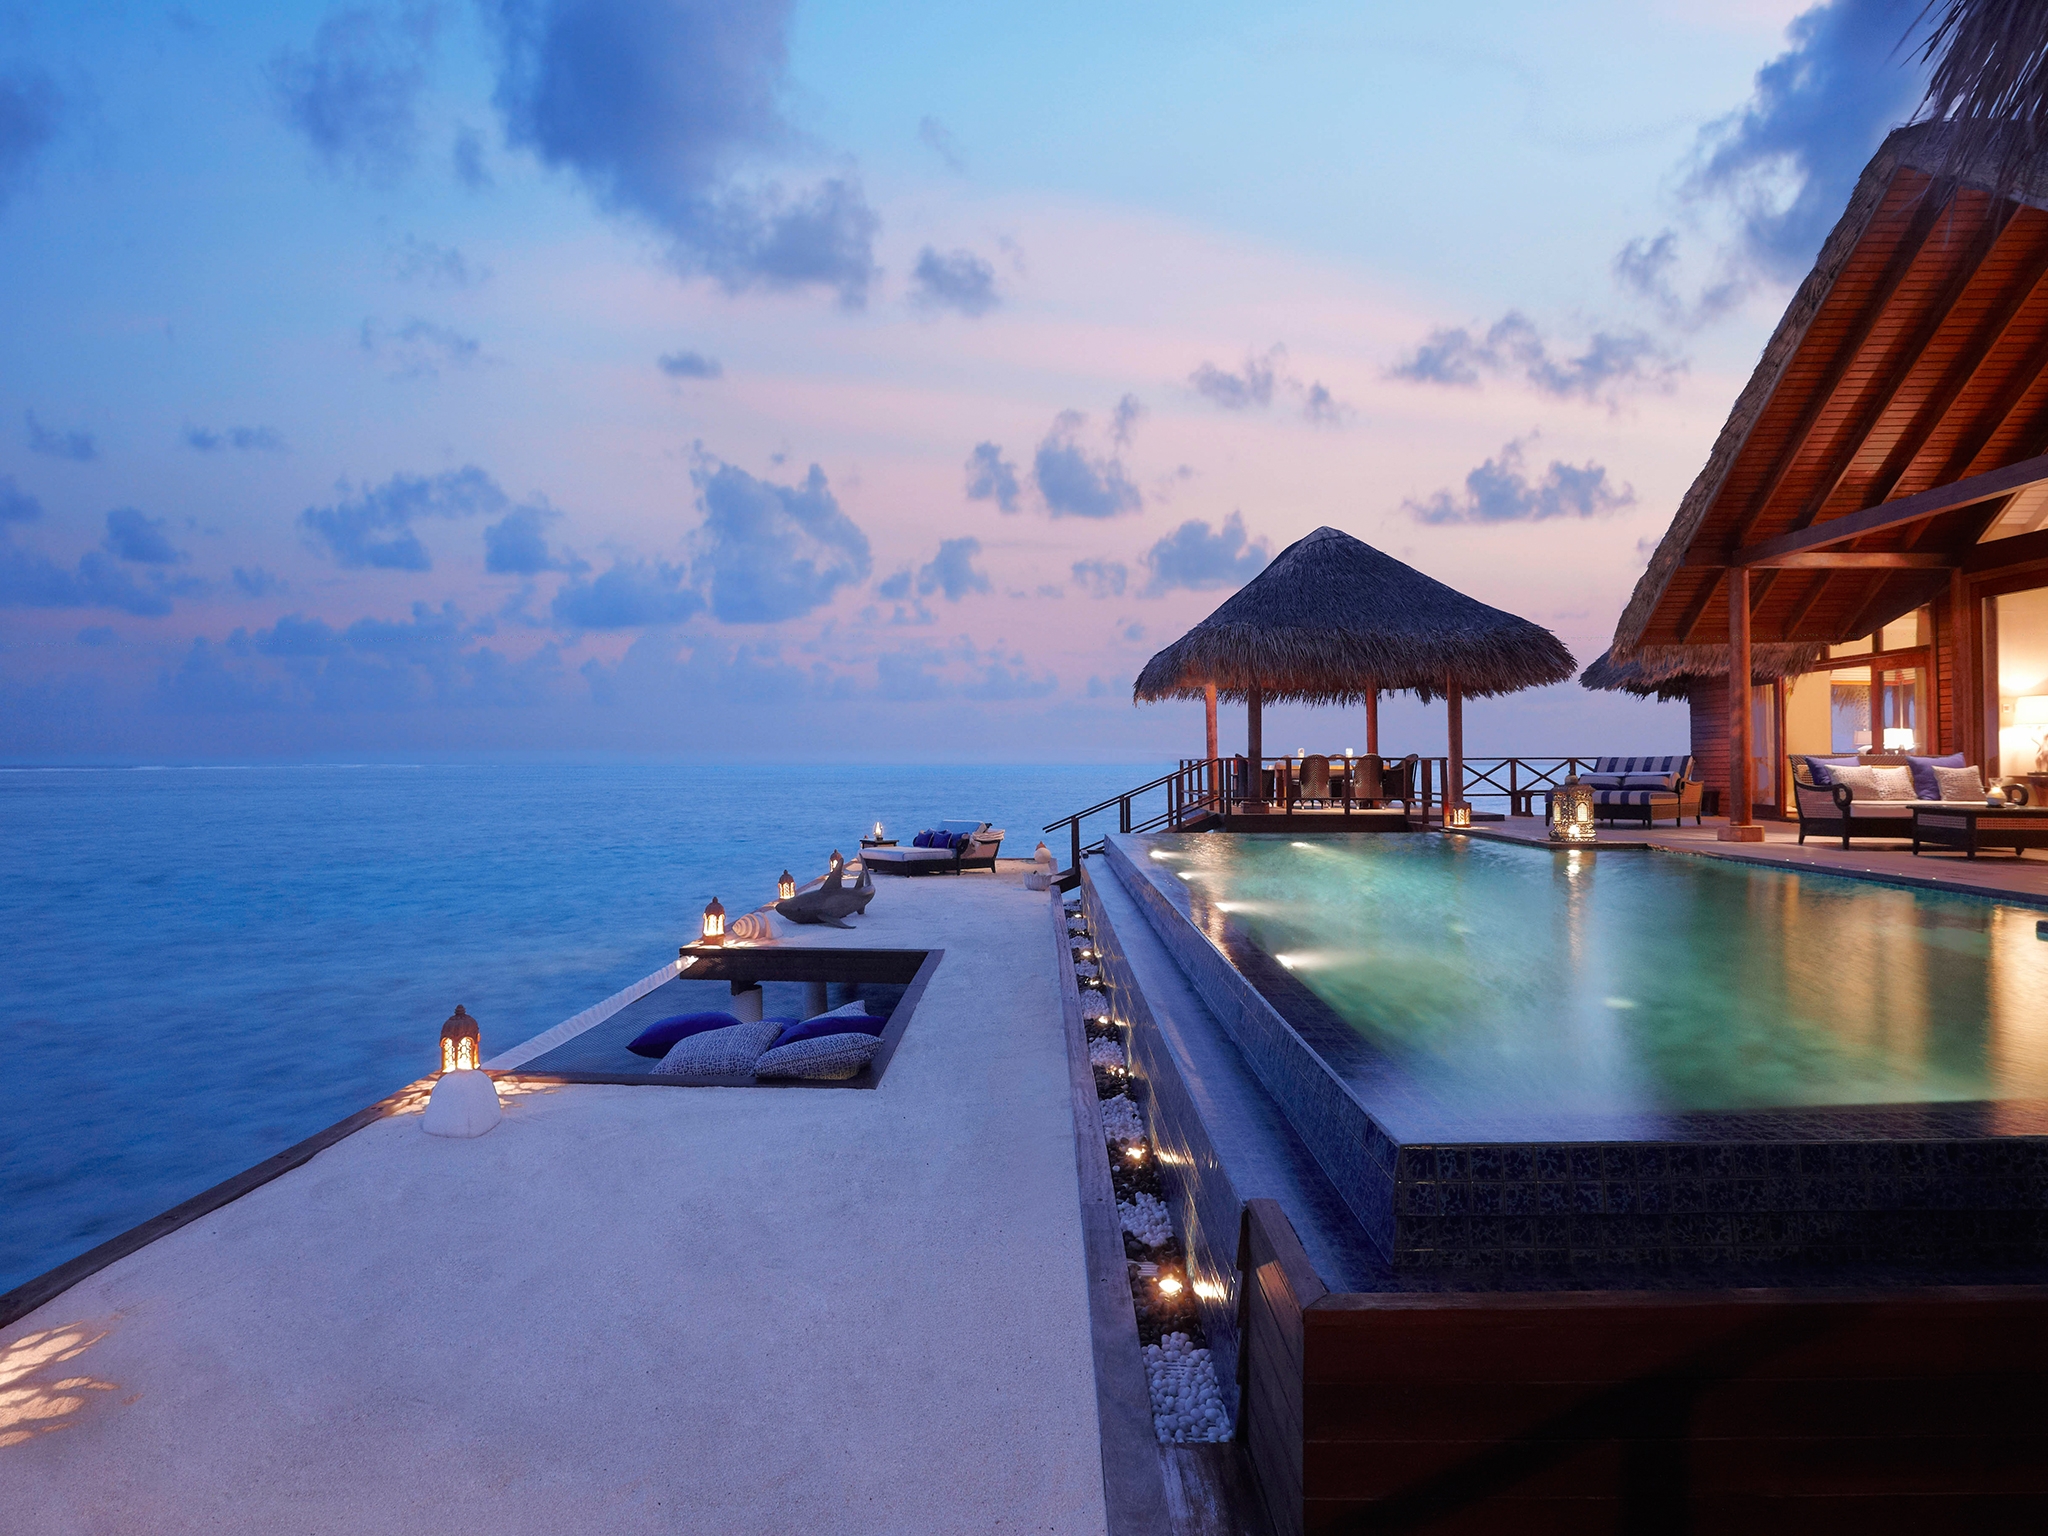 Luxury full. Бунгало на Бали. Тадж экзотика Мальдивы. Гостиничный комплекс «цветок океана» (Ocean Flower), Мальдивы. Мальдивы Резорт лакшери.